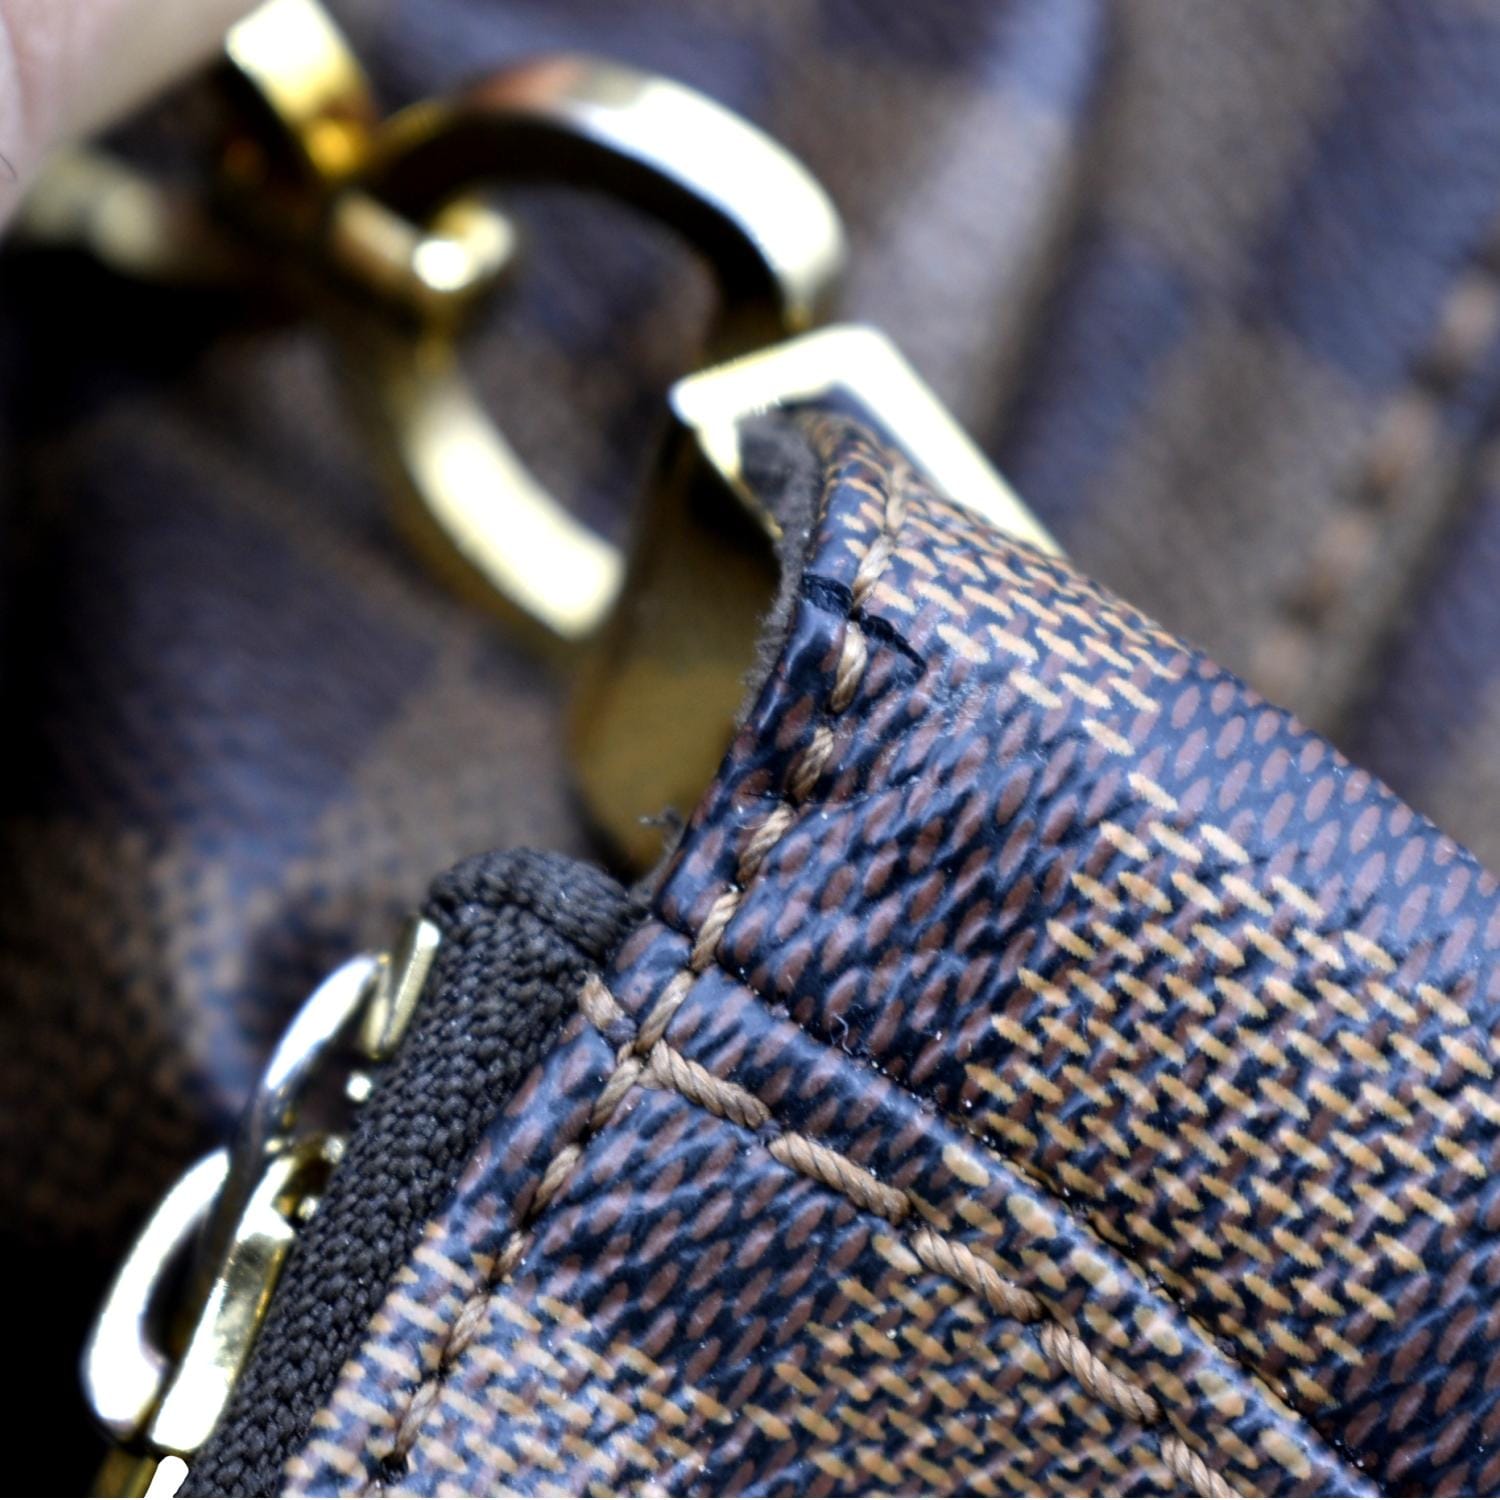 Portobello leather handbag Louis Vuitton Brown in Leather - 31300317